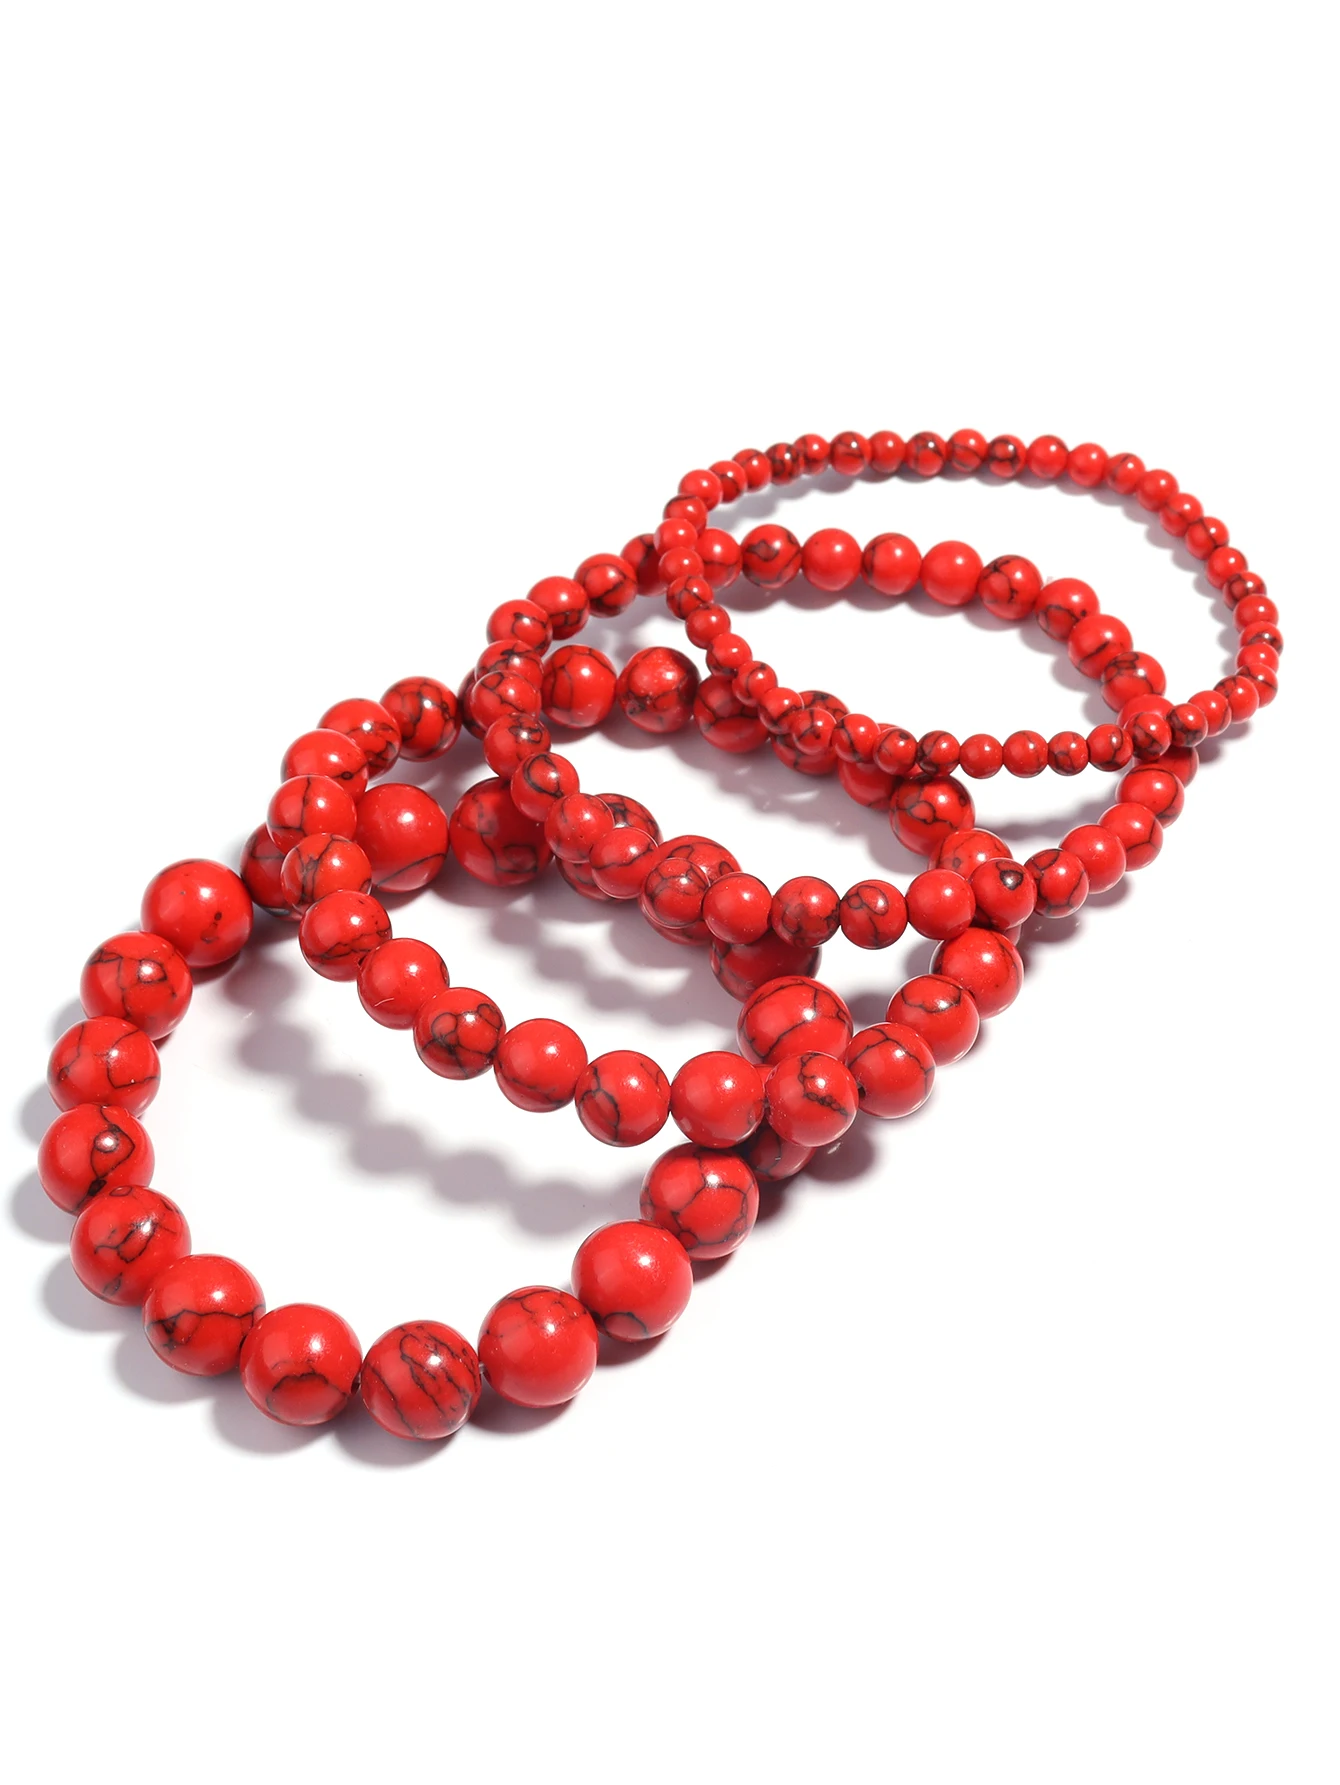 Meditation beads